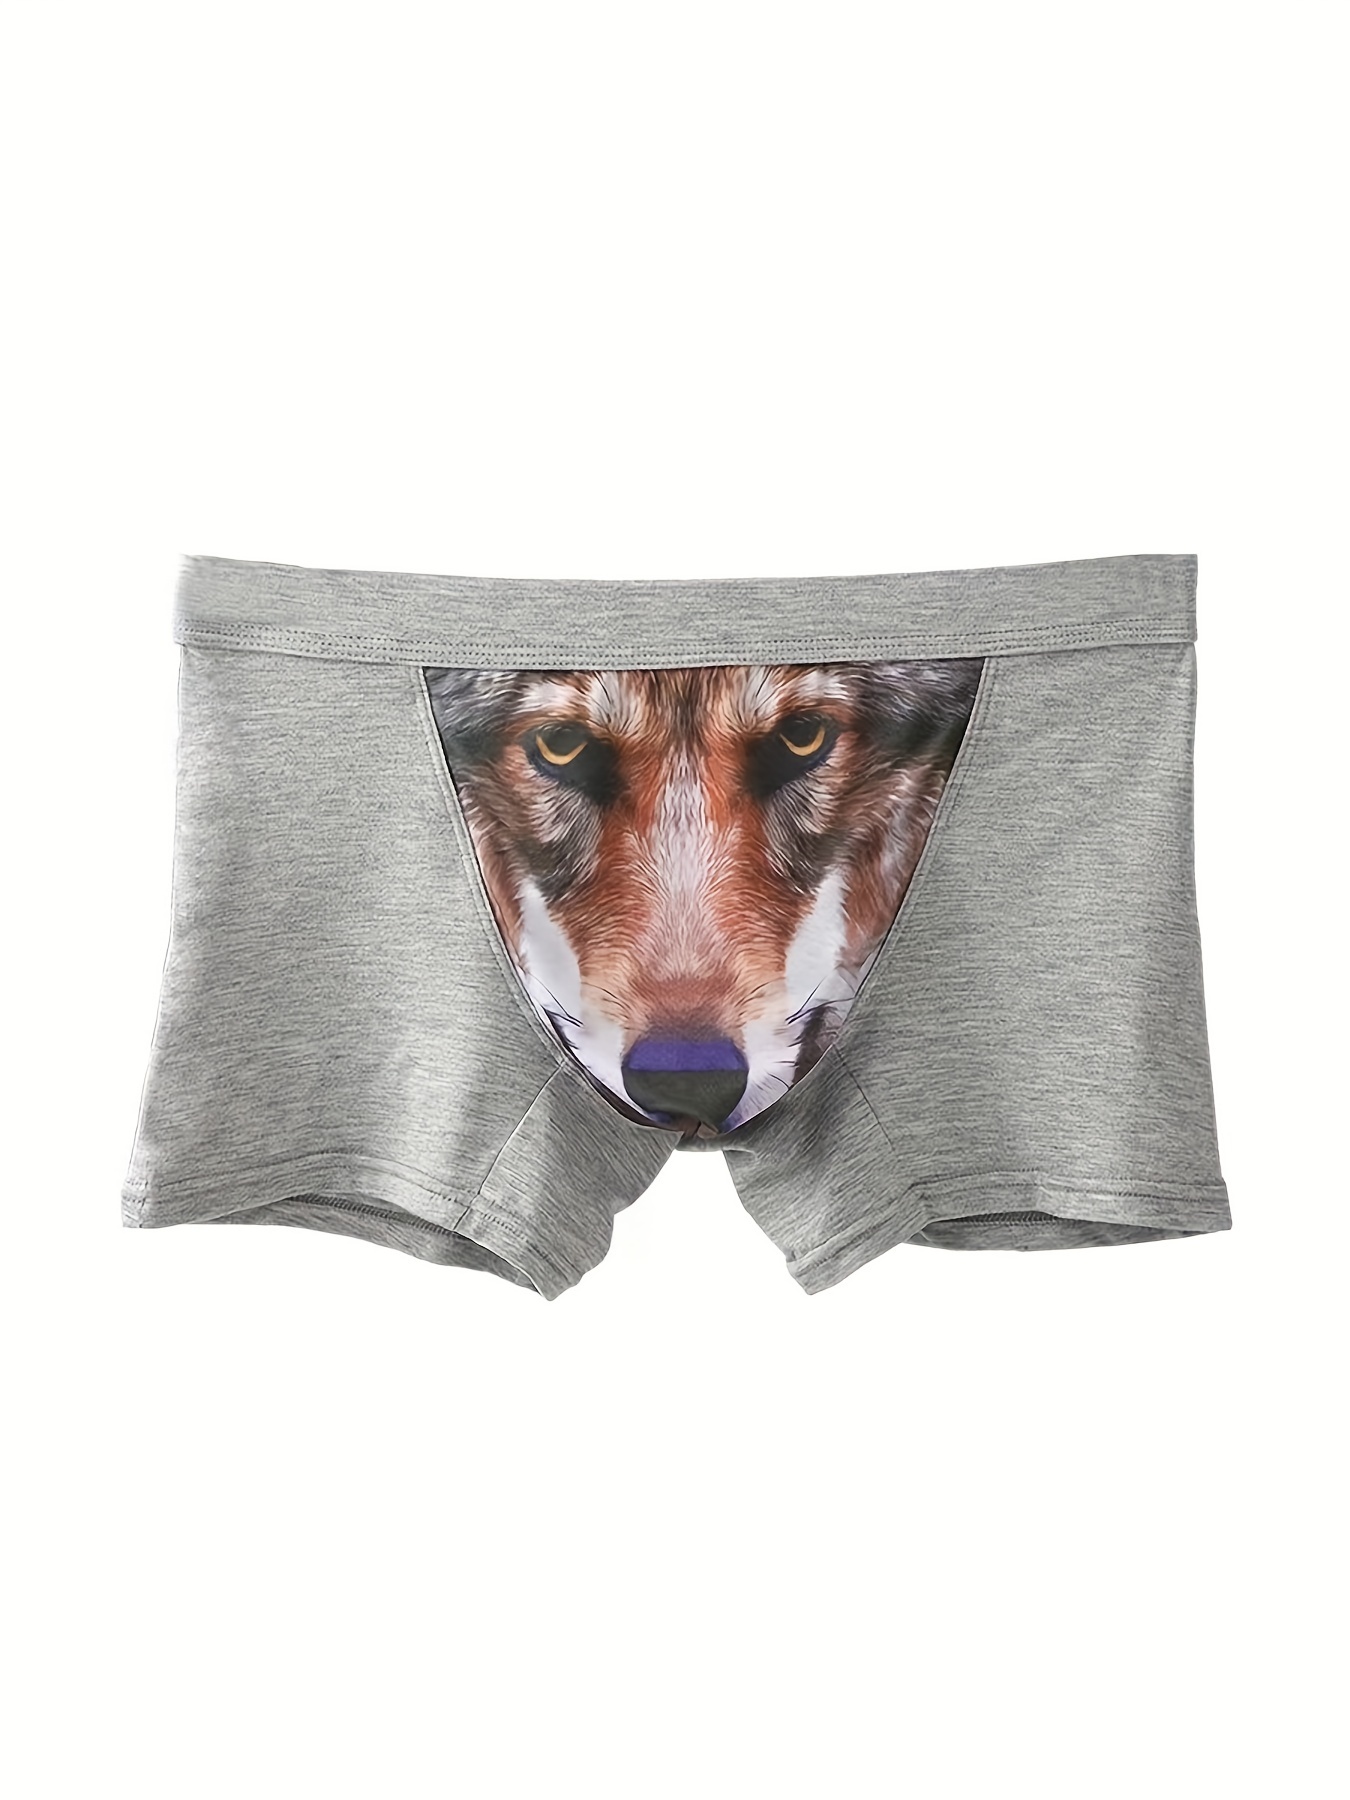 Elephant Underwear Nature Style Cartoon Funny Panties Print Shorts Briefs  3D Pouch Men's Large Size Boxer Shorts - AliExpress